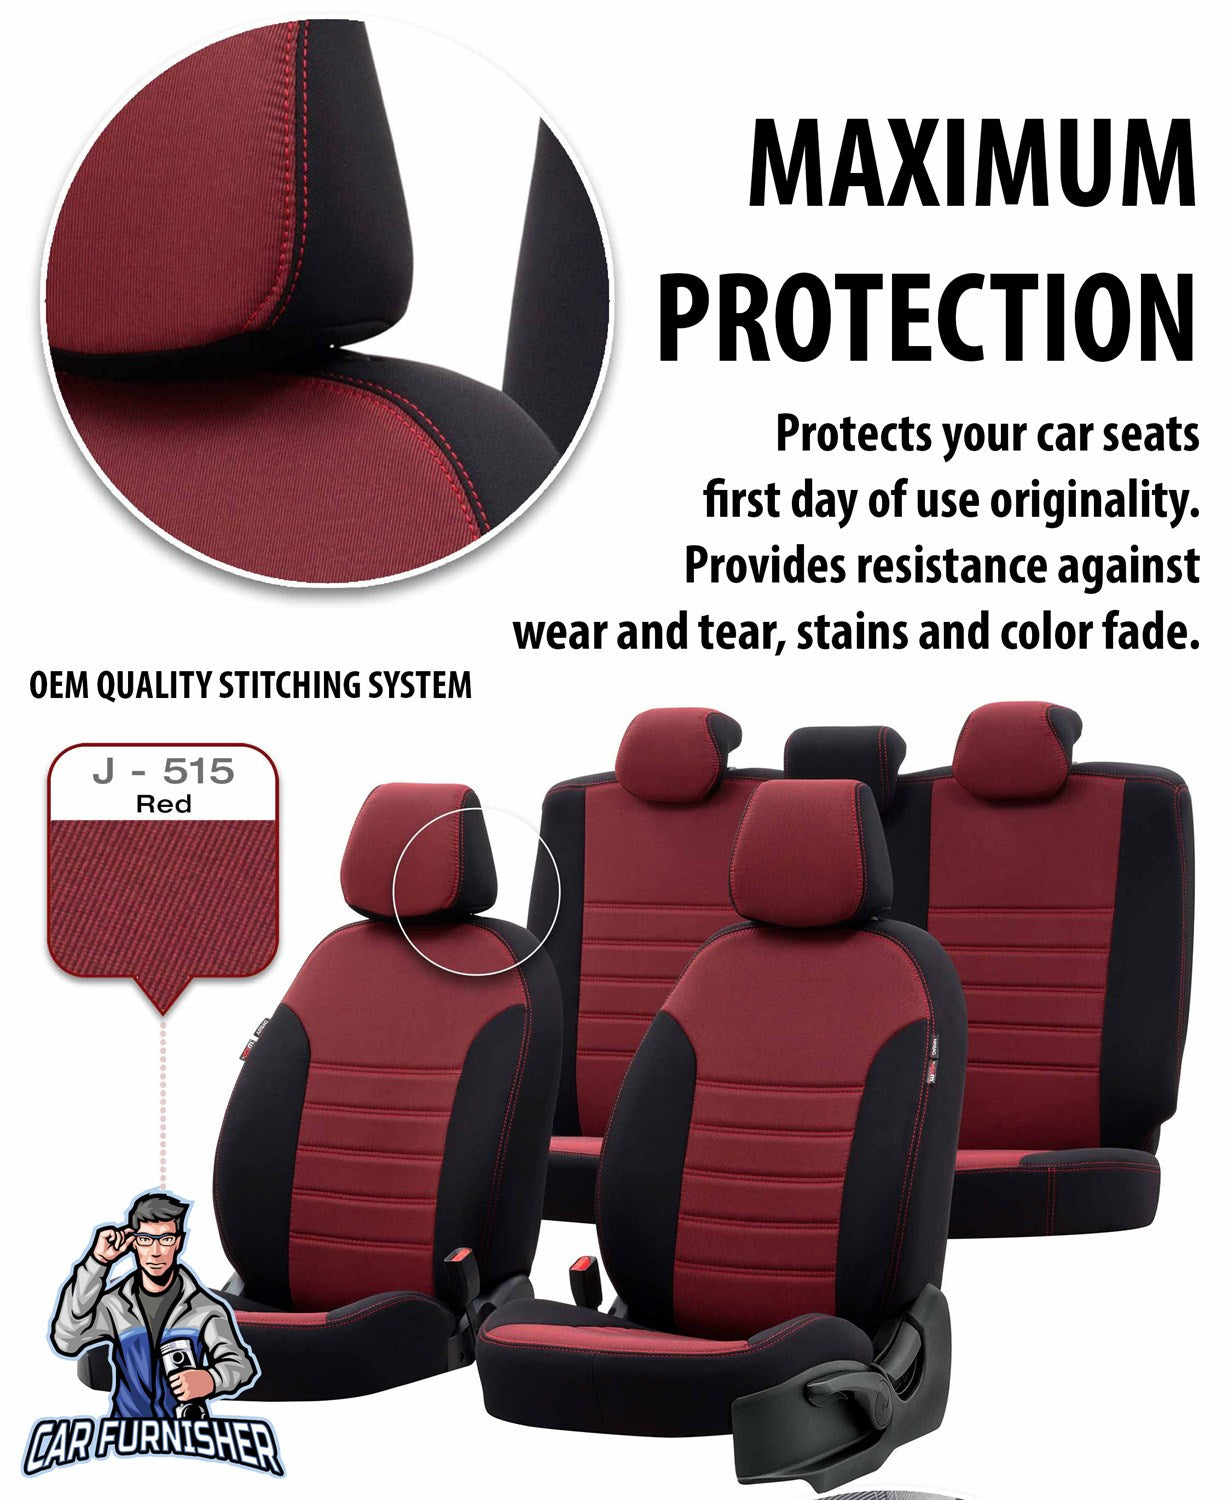 Nissan Pathfinder Seat Cover Original Jacquard Design Black Jacquard Fabric